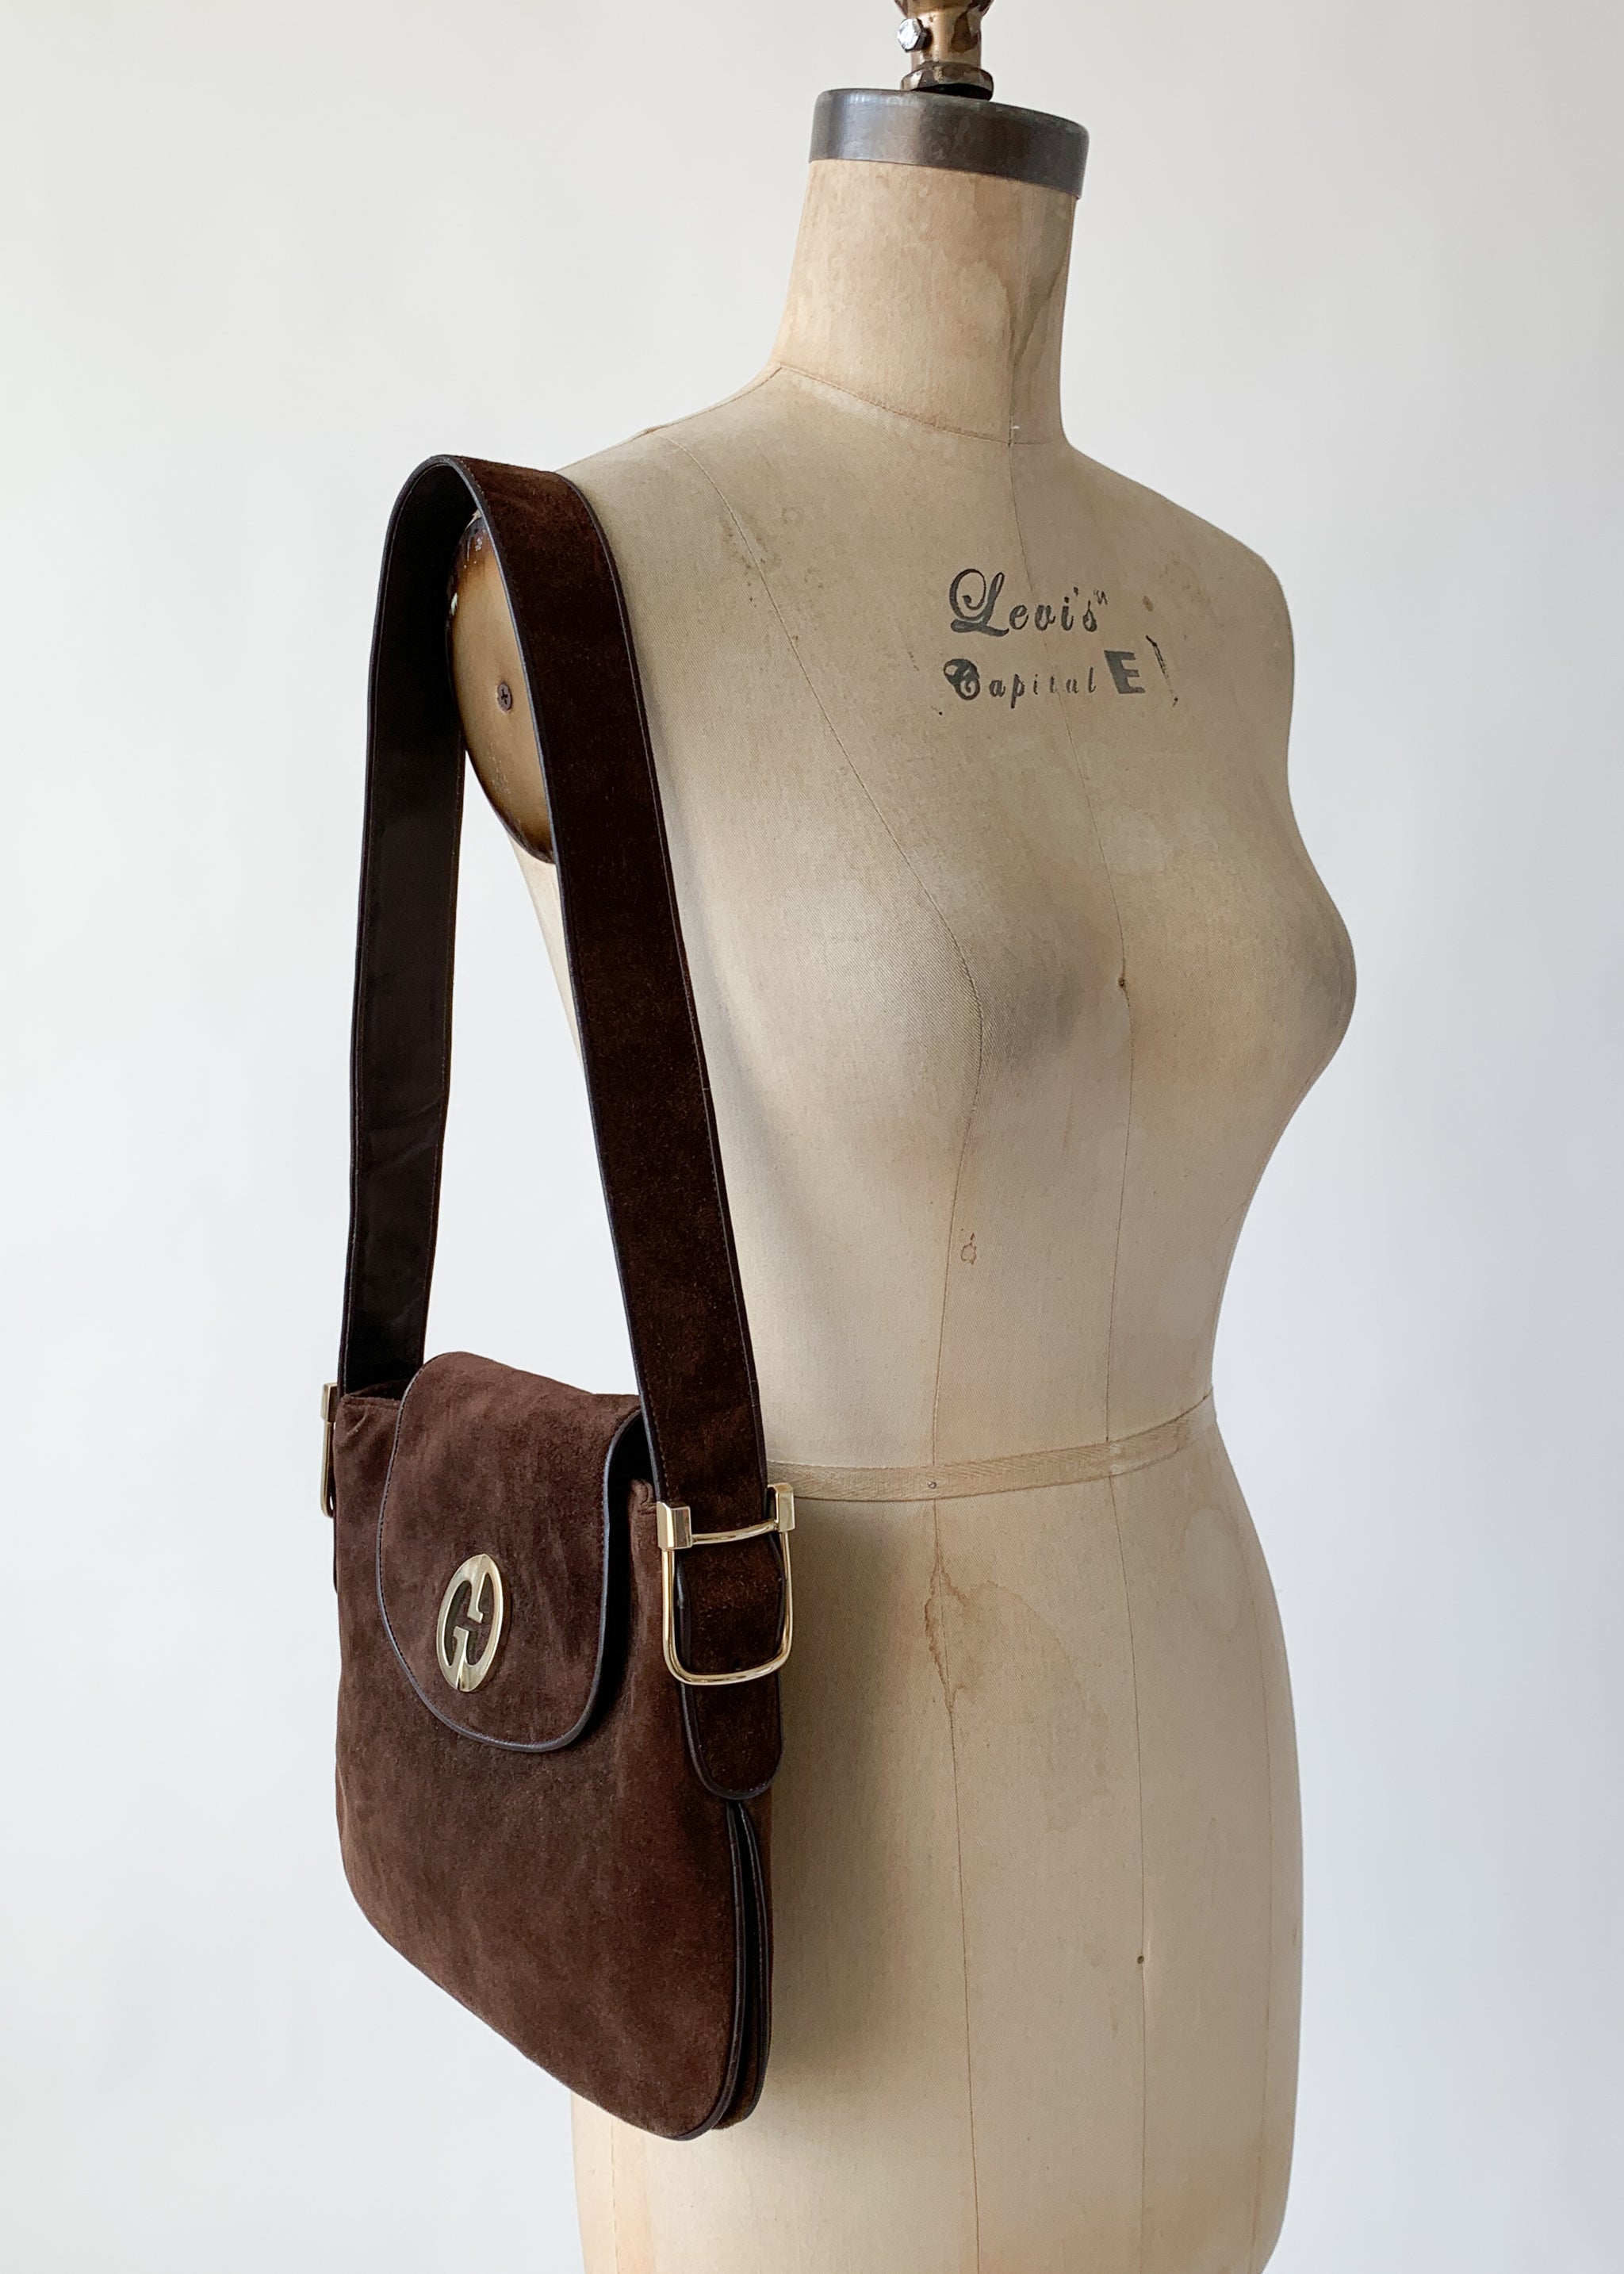 Gucci Handbag Brown Leather Deer Jockey Design | Gucci purse, Gucci  handbags, Leather